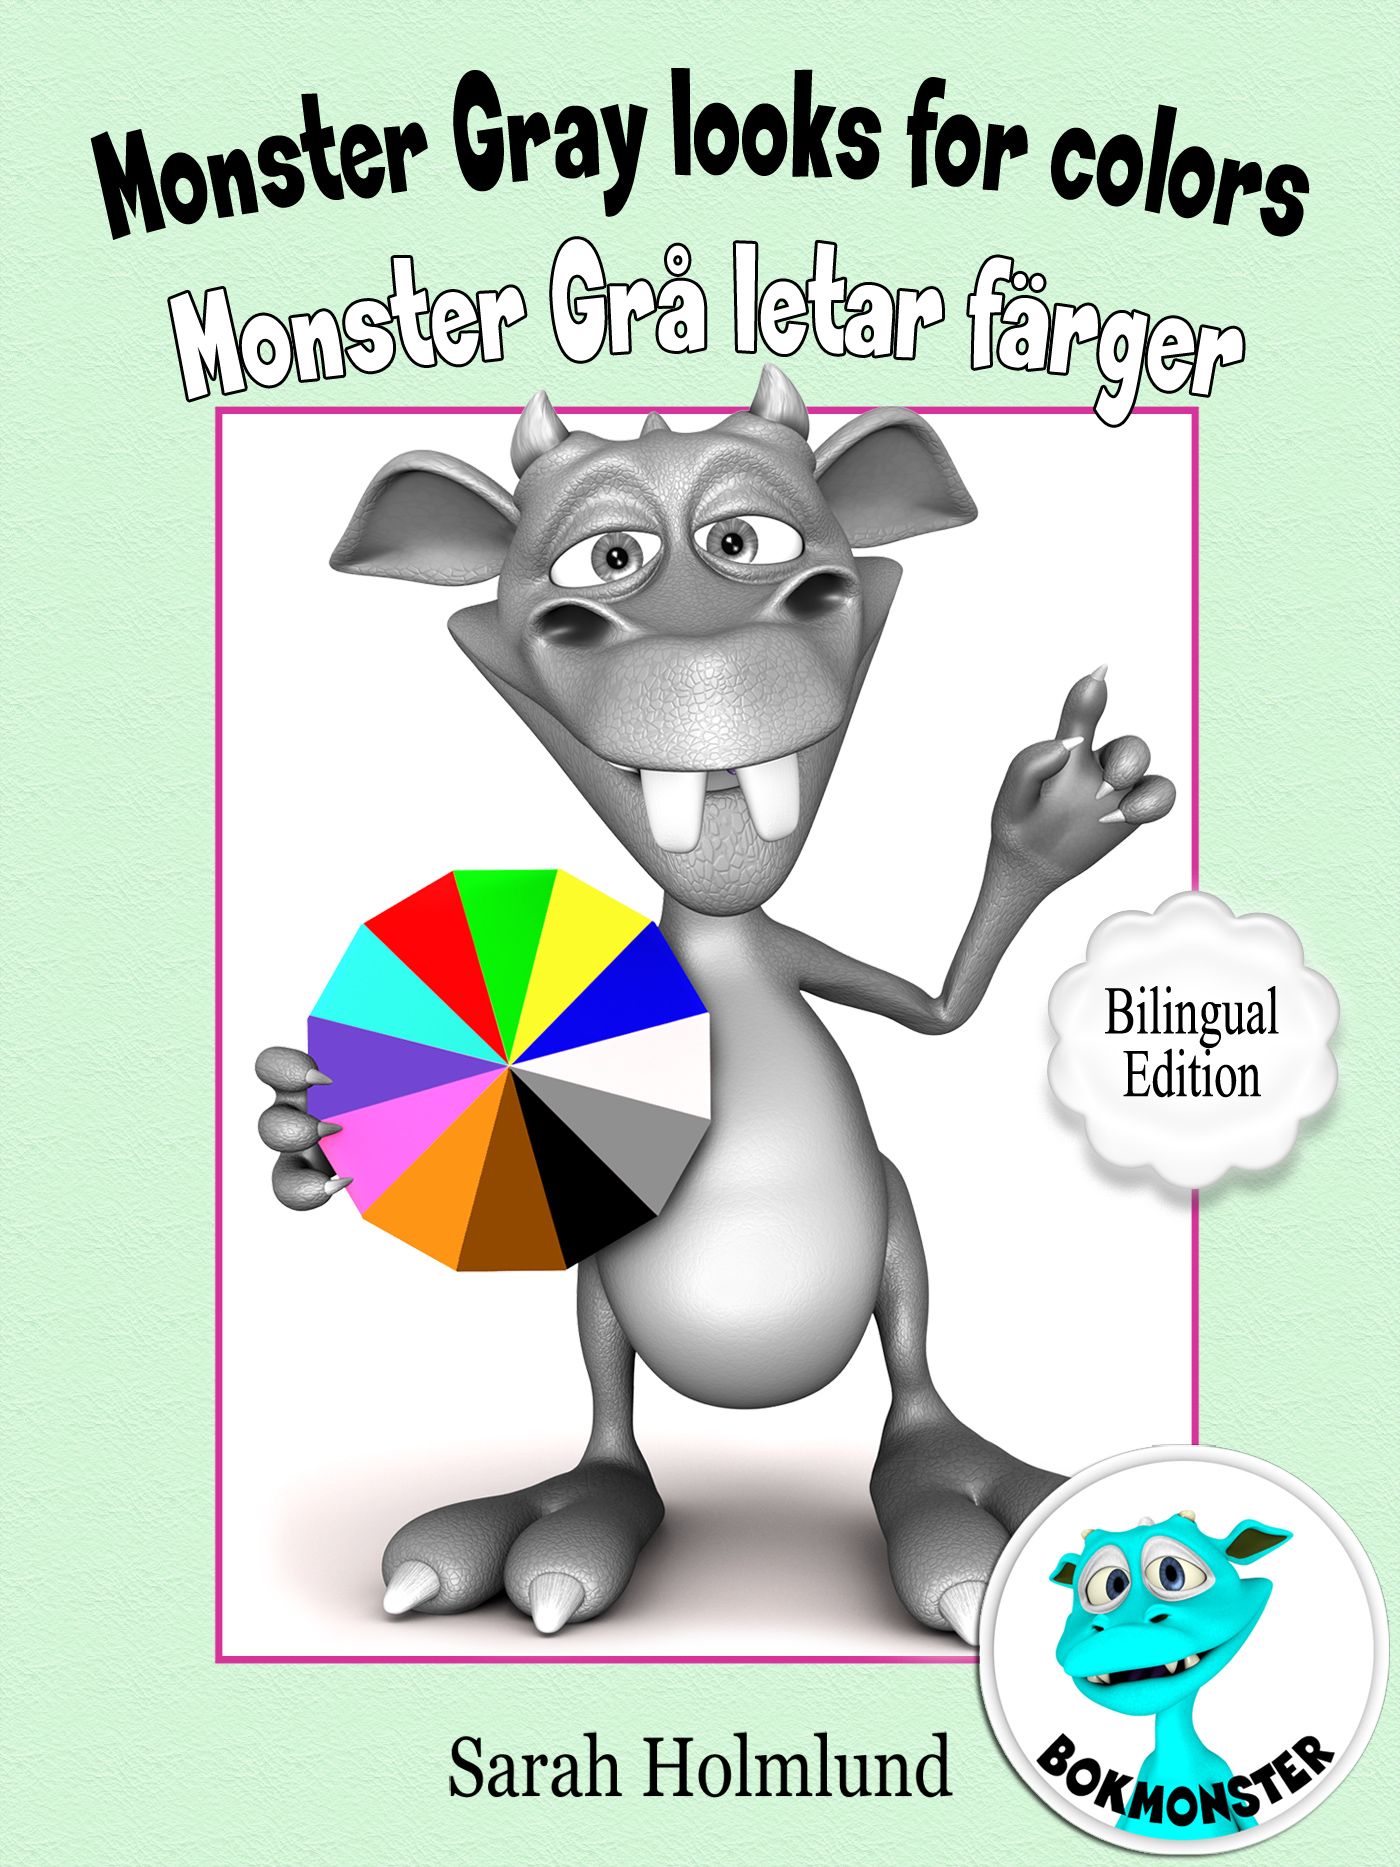 Monster Gray looks for colors - Monster Grå letar färger - Bilingual Edition, e-bok av Sarah Holmlund